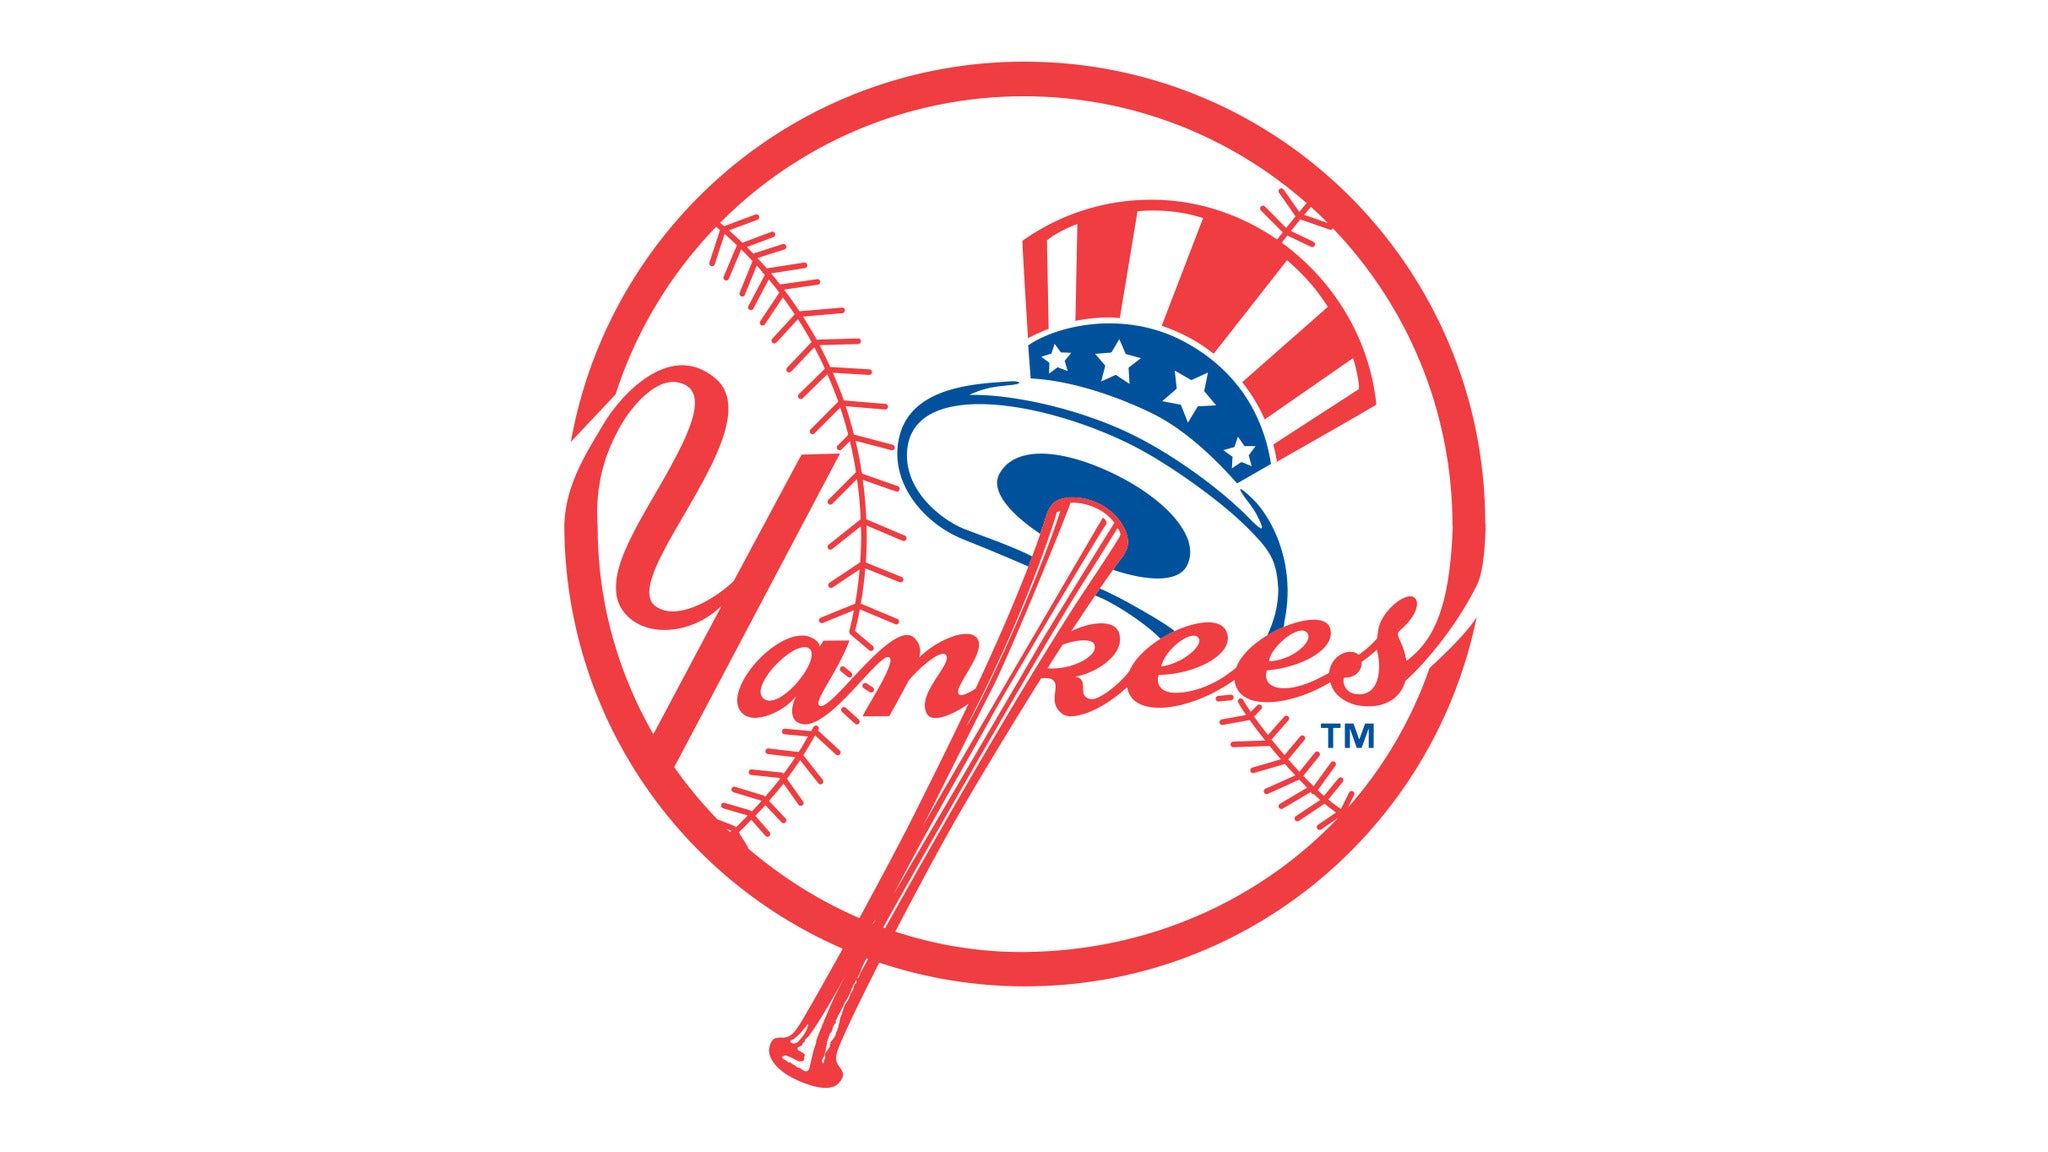 New York Yankees v. Oakland Athletics